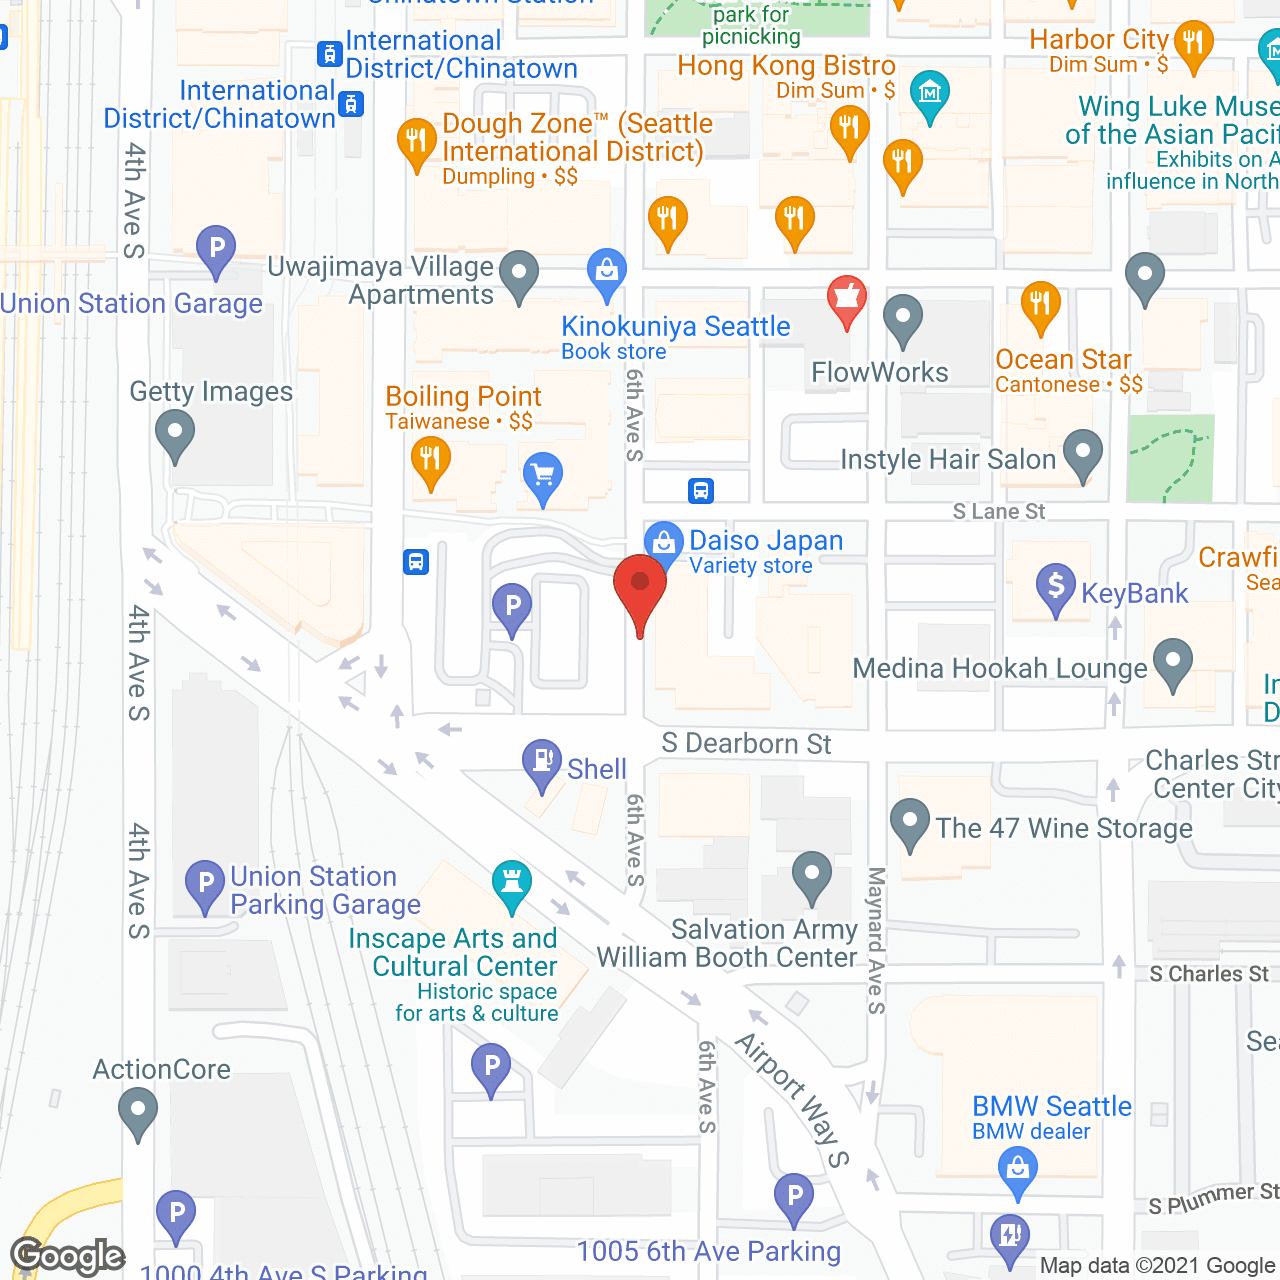 Nikkei Manor in google map